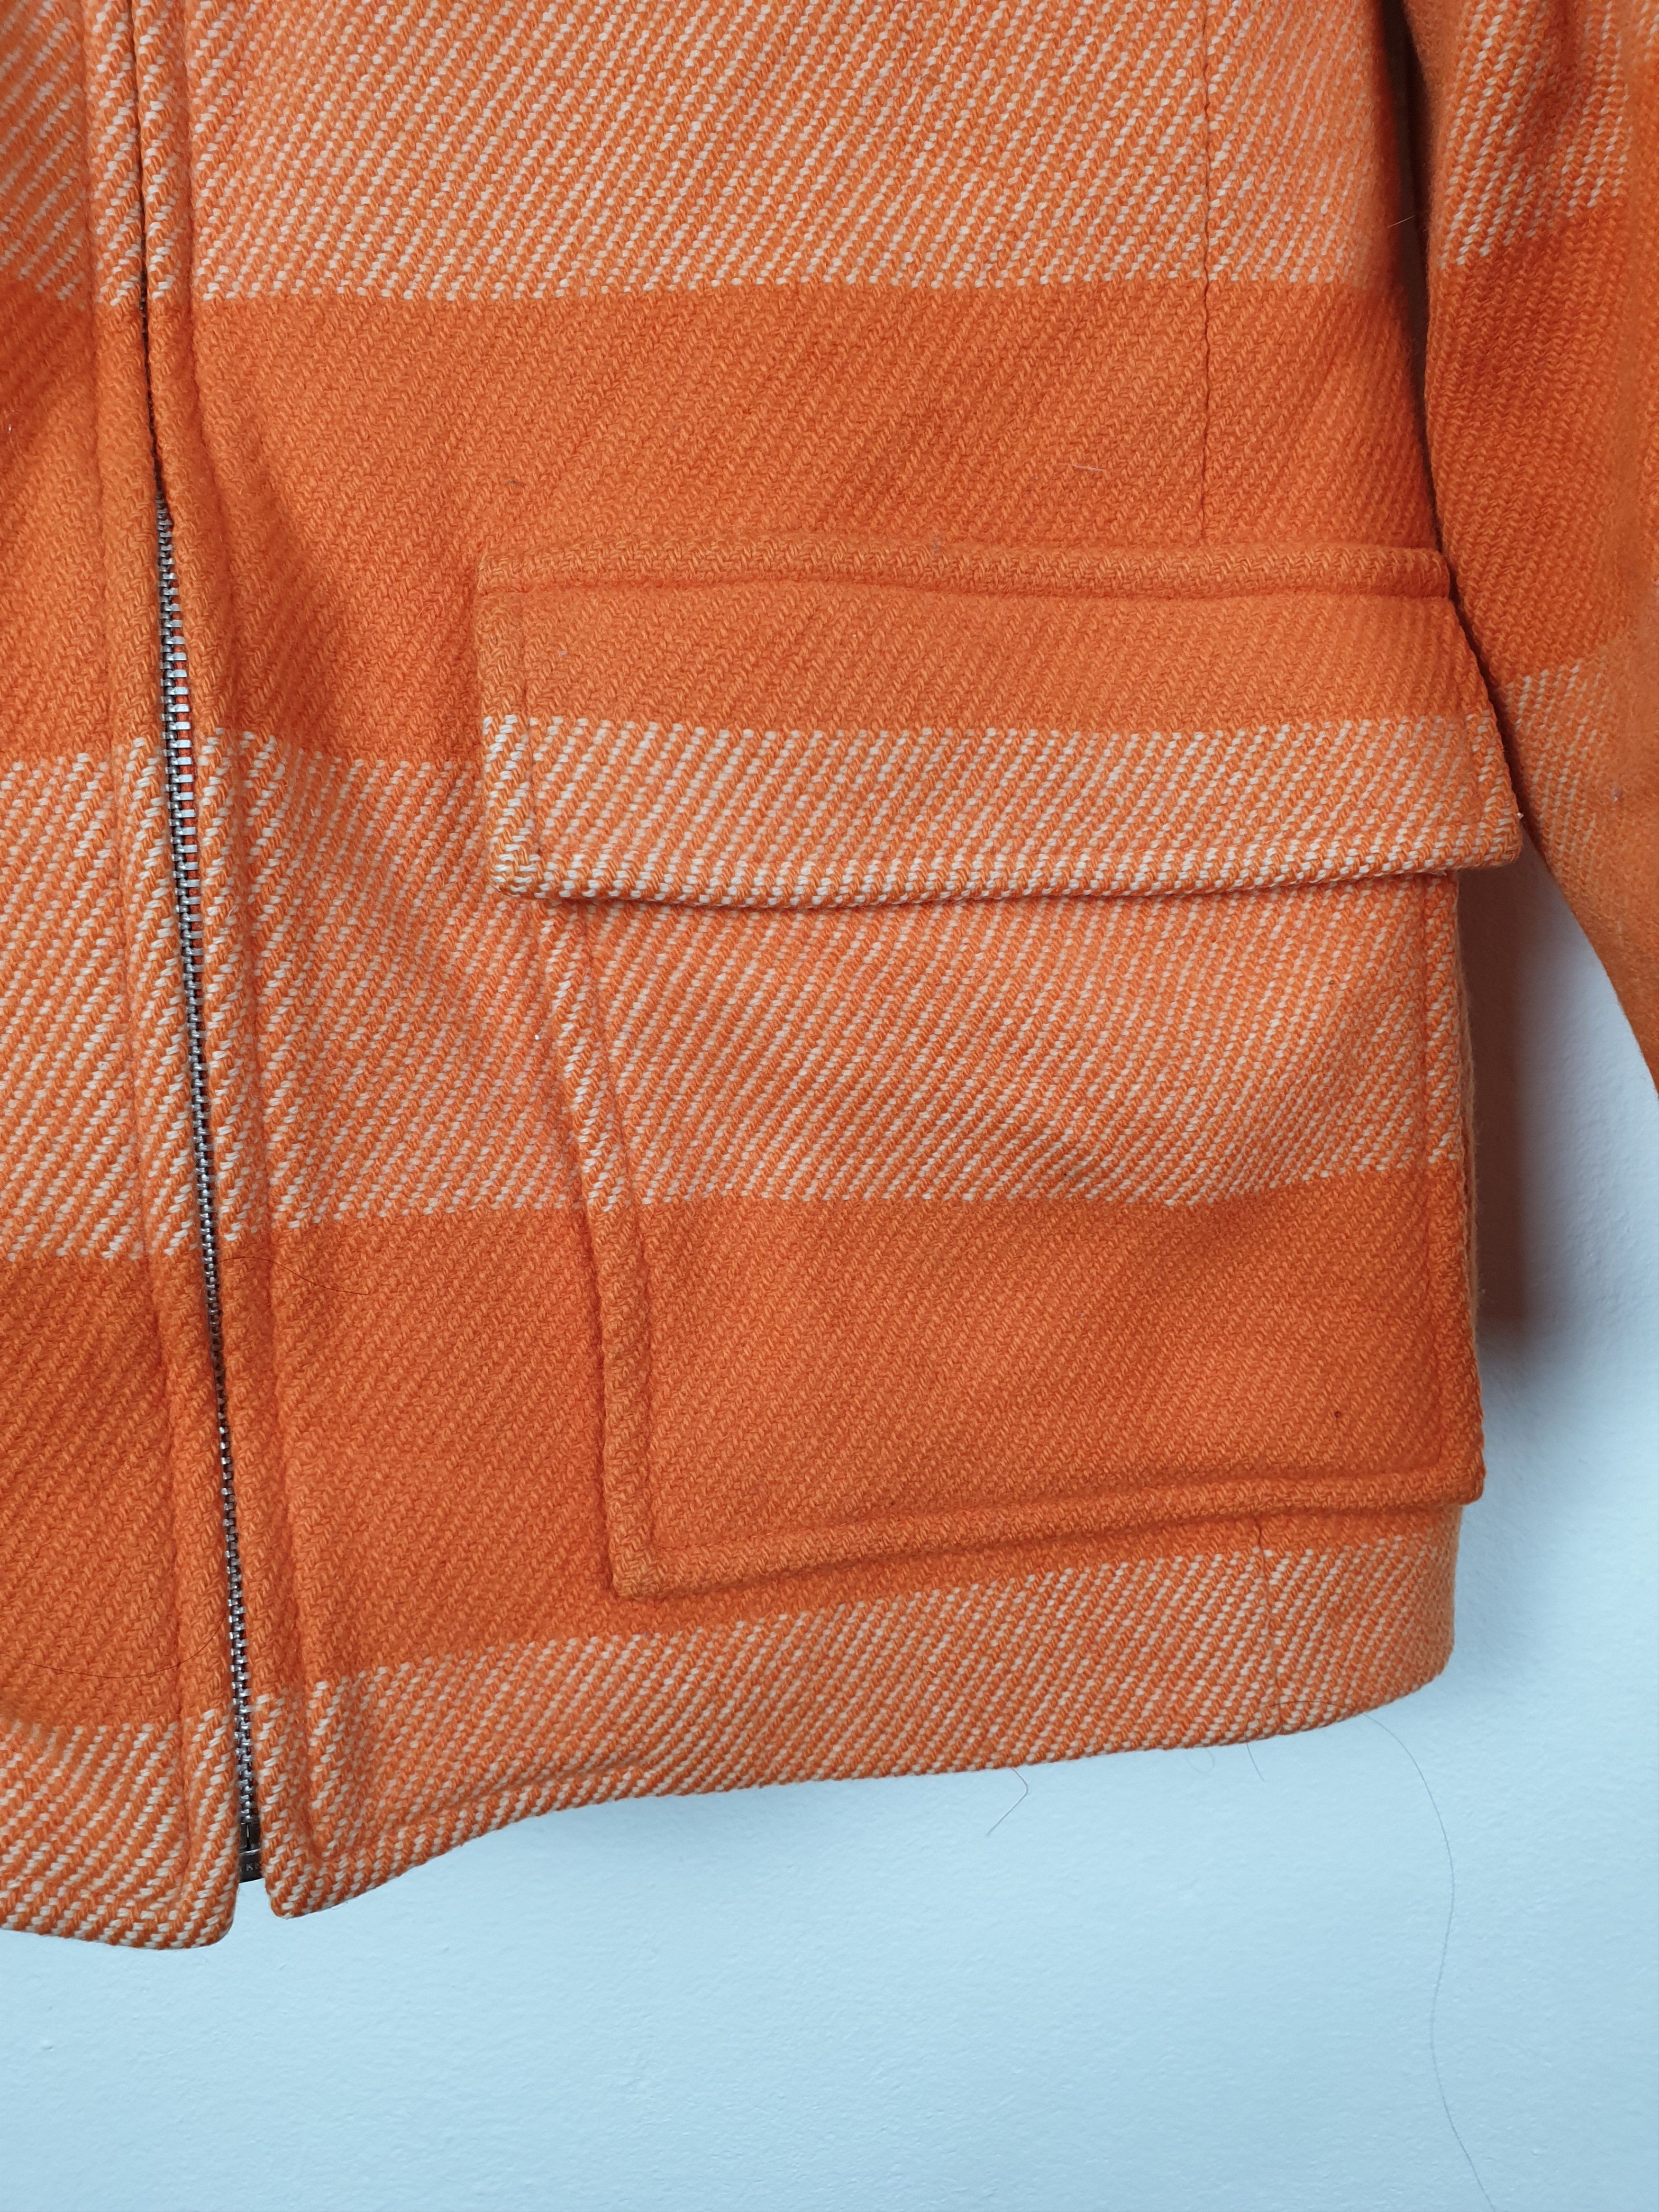 Vintage Vintage 90's COURREGES Wool Striped Hoodie Jacket Size US S / EU 44-46 / 1 - 9 Preview